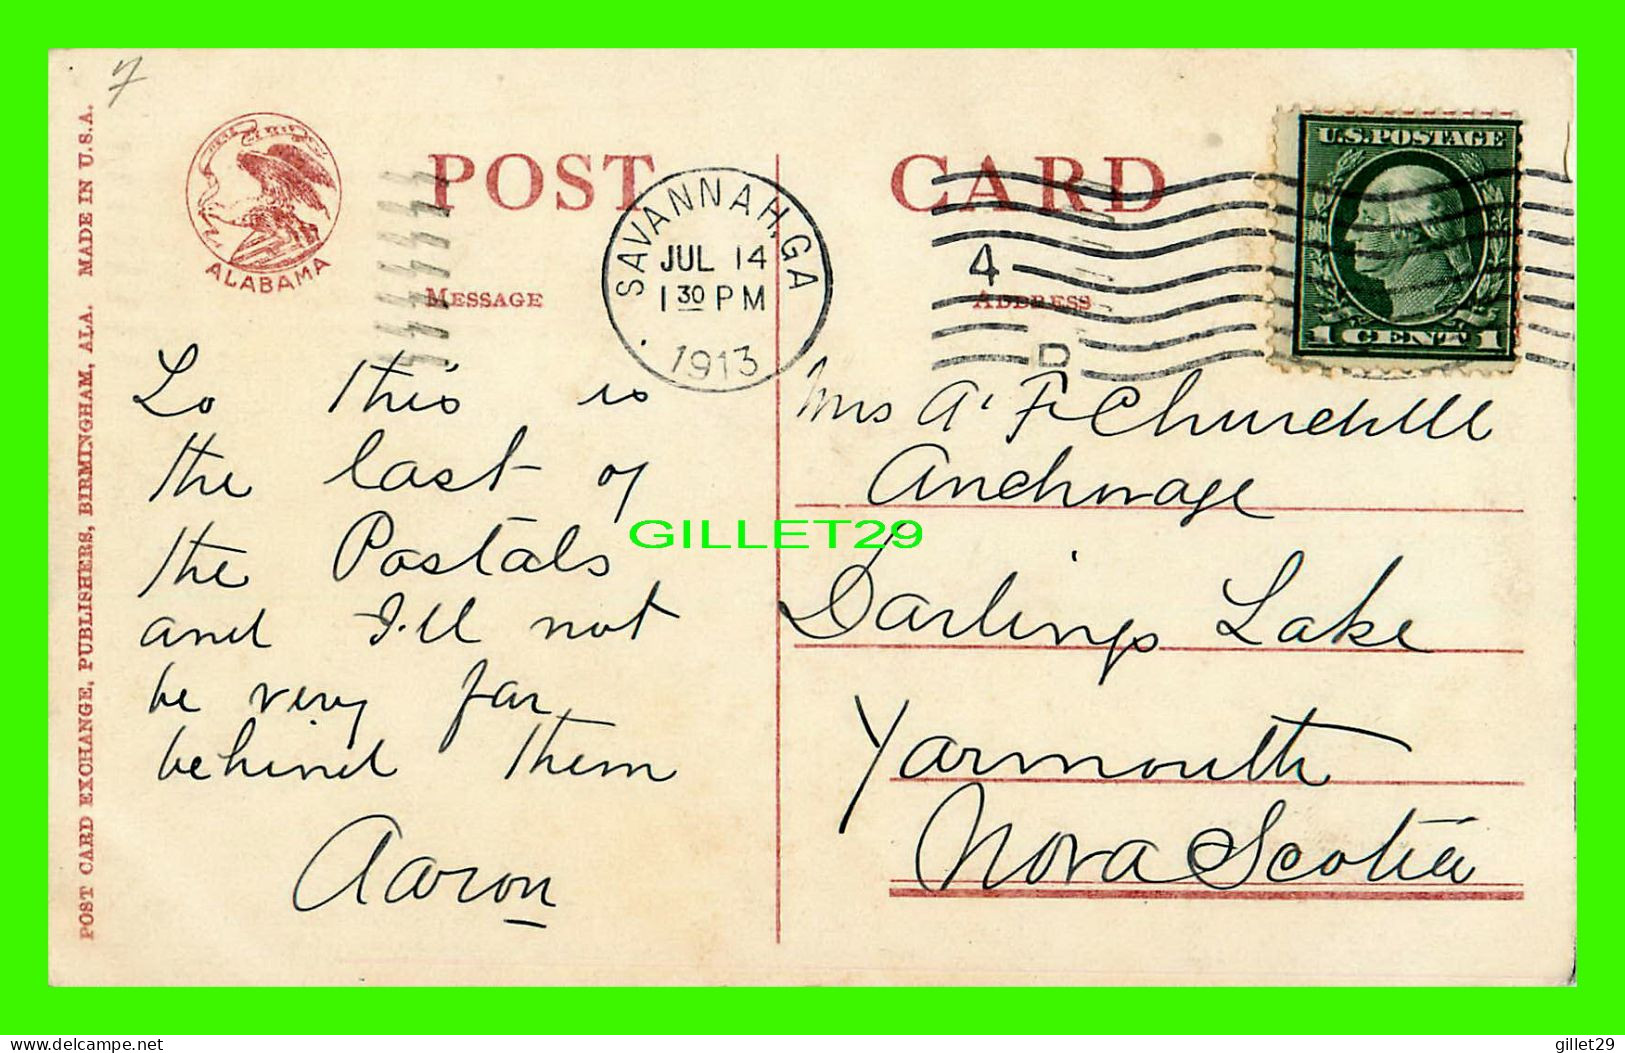 BIRMINGHAM, AL - ITALIAN GARDENS OF MR. RICHARD W. MASSEY - TRAVEL IN 1913 - POST CARD EXCHANGE PUB. - - Other & Unclassified